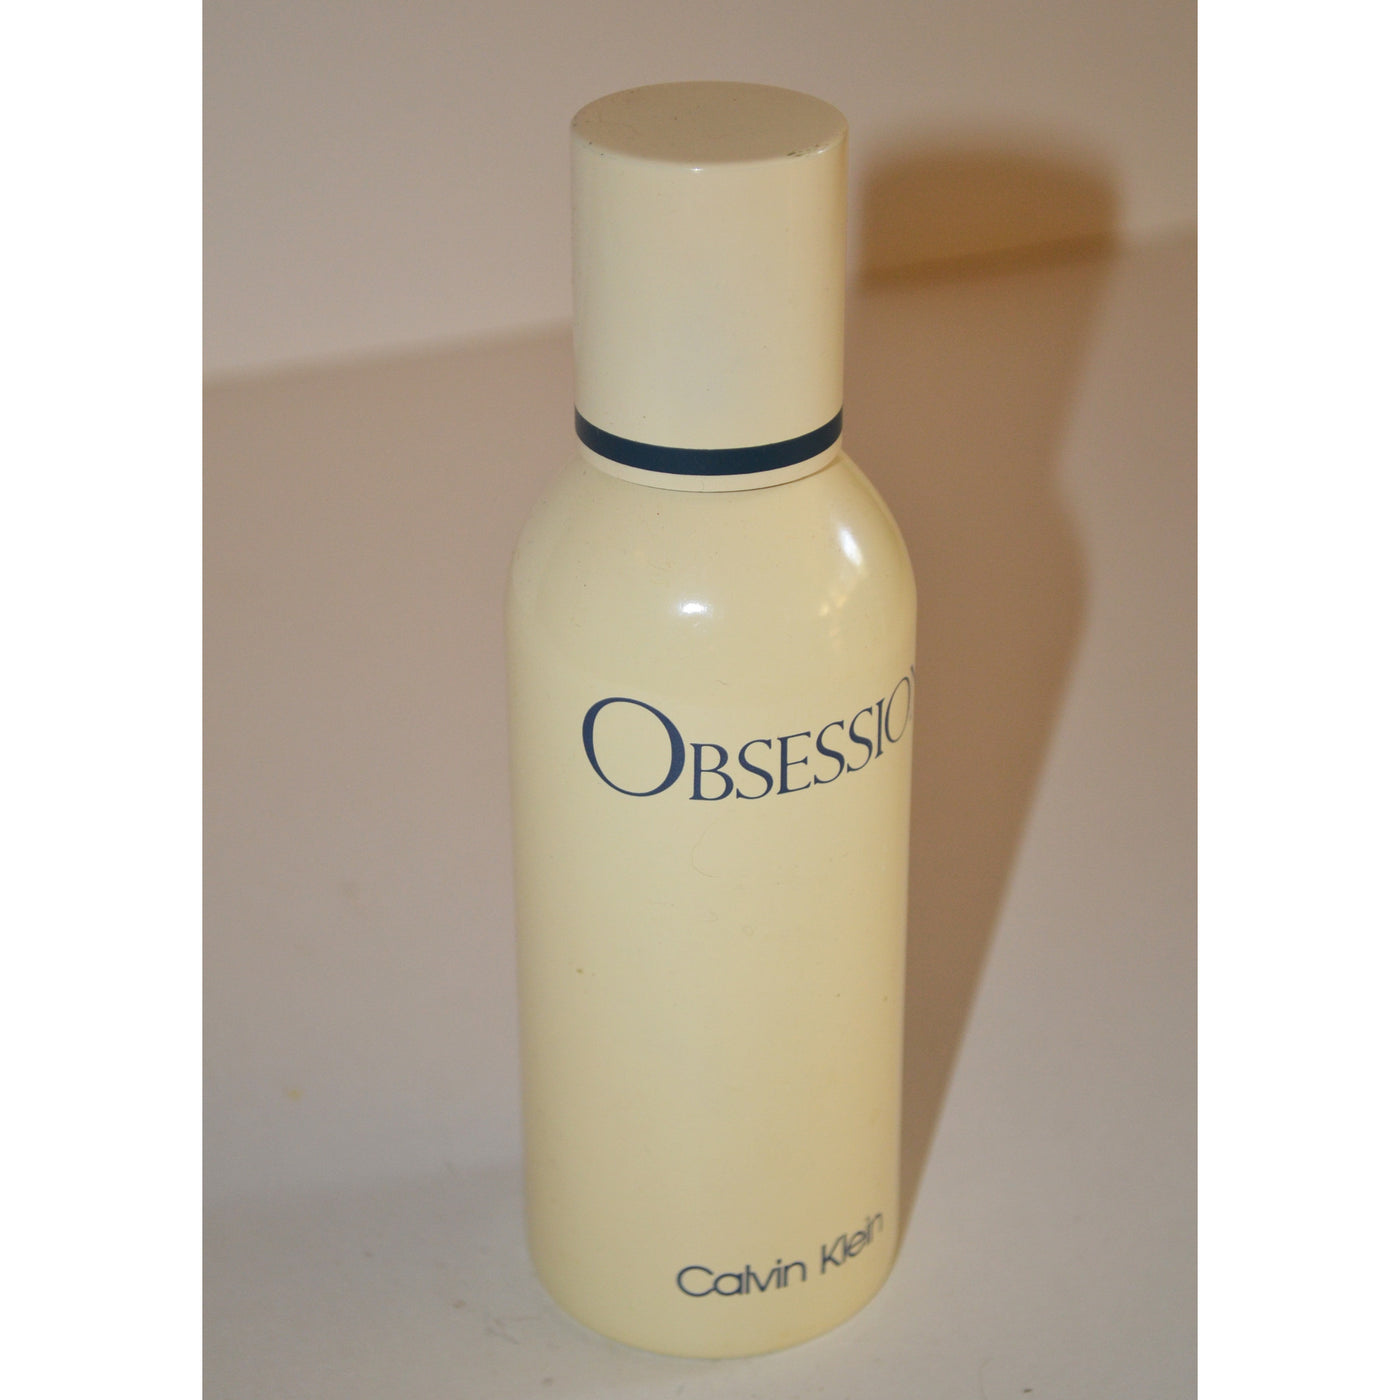 Vintage Obsession Body Oil Spray By Calvin Klein